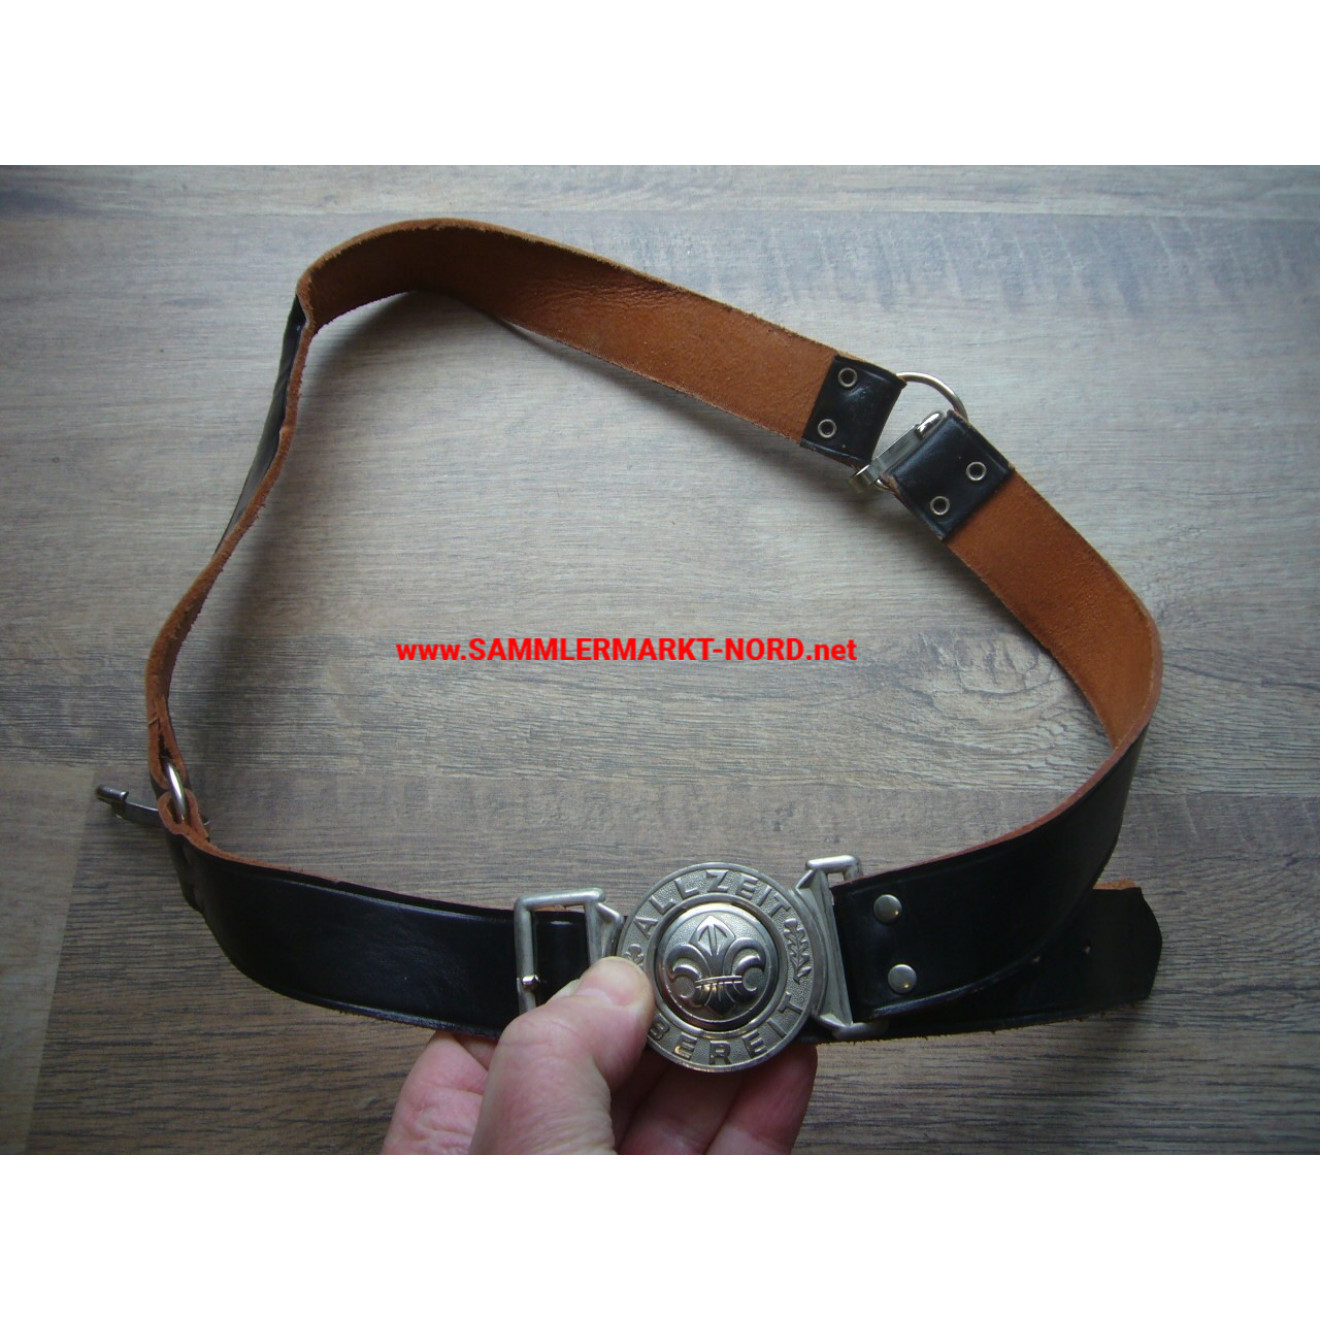 FRG - Boy Scout Belt with Belt buckle "Allzeit bereit" (Ready for action)